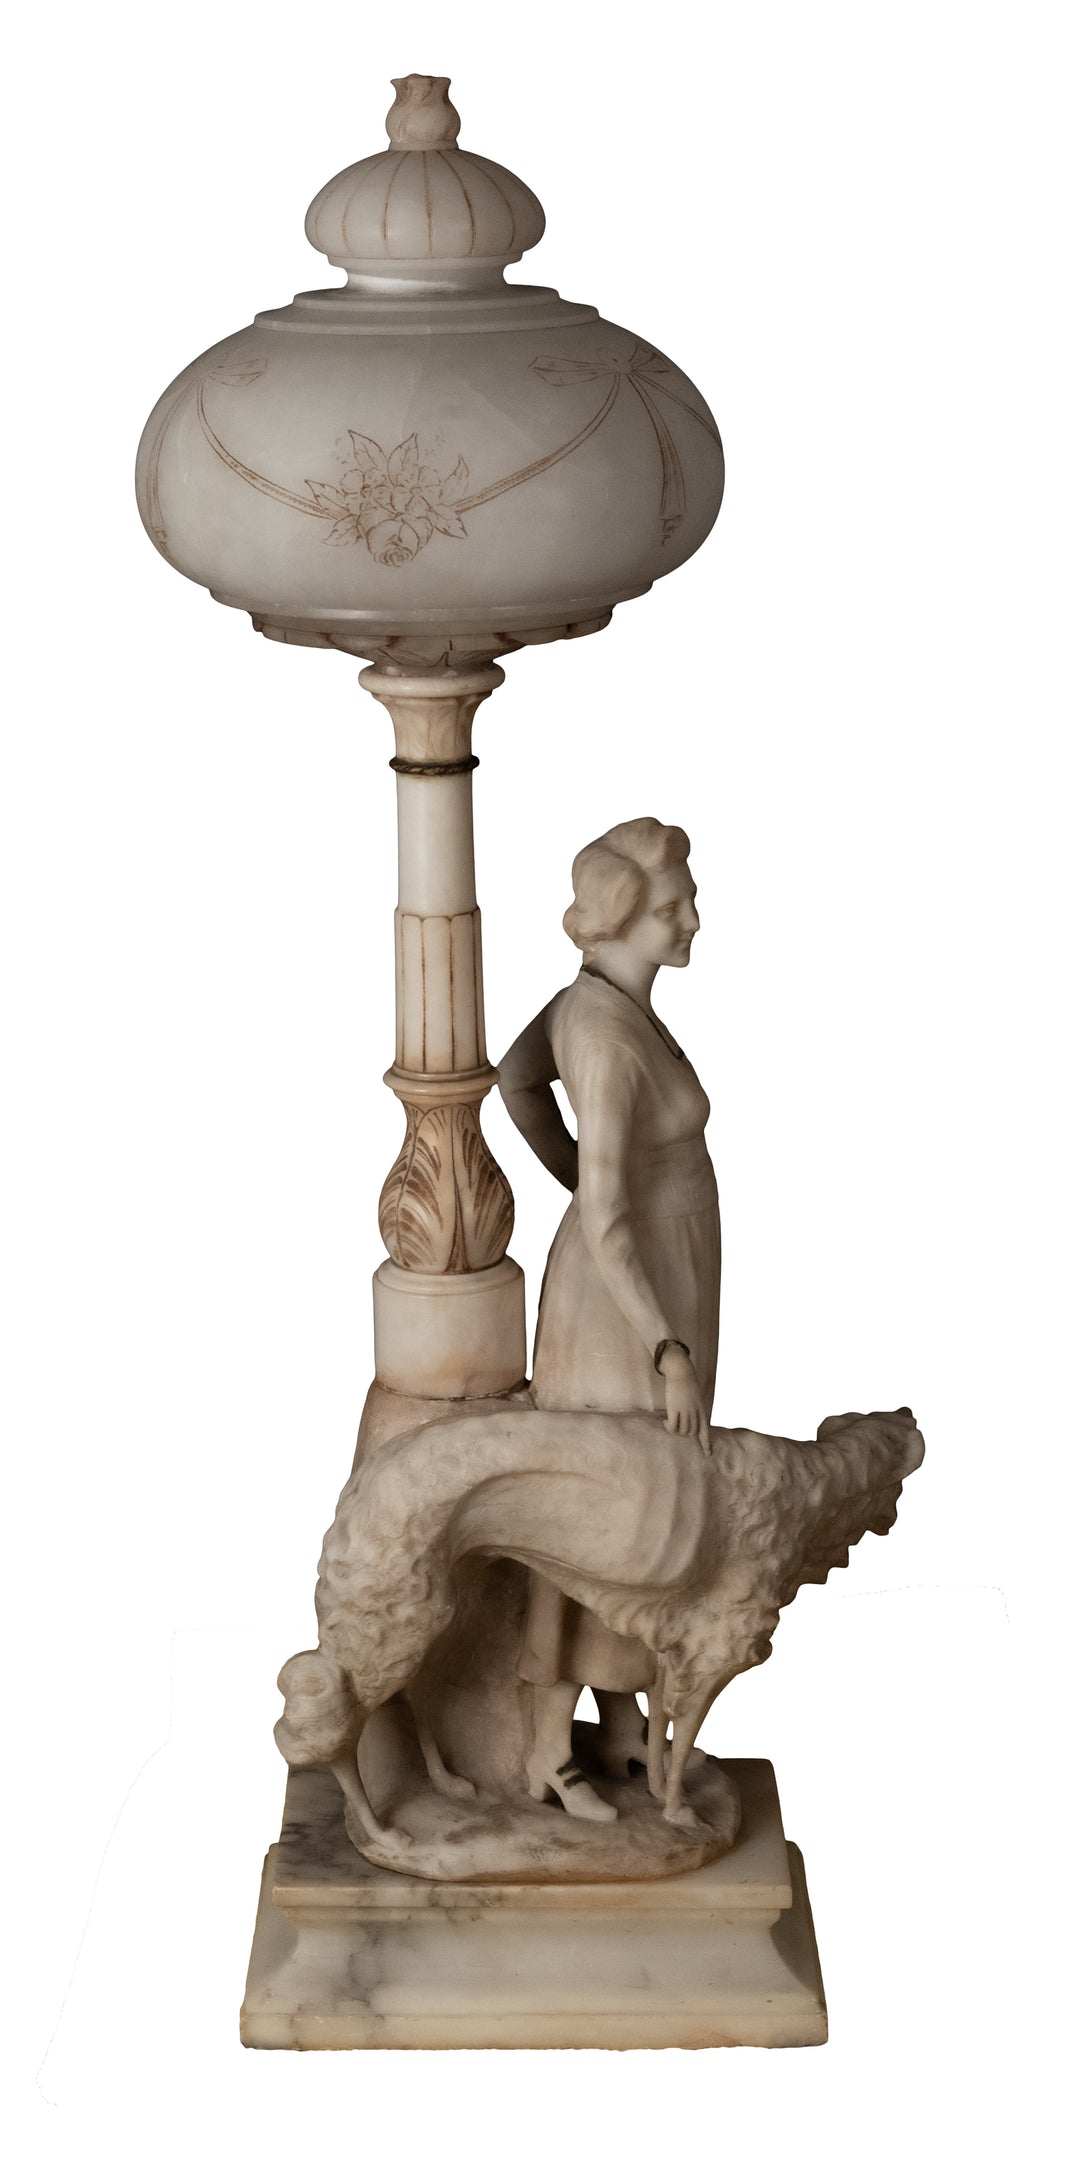 Italian Art Nouveau Alabaster Sculptural Lamp (c. 1890)